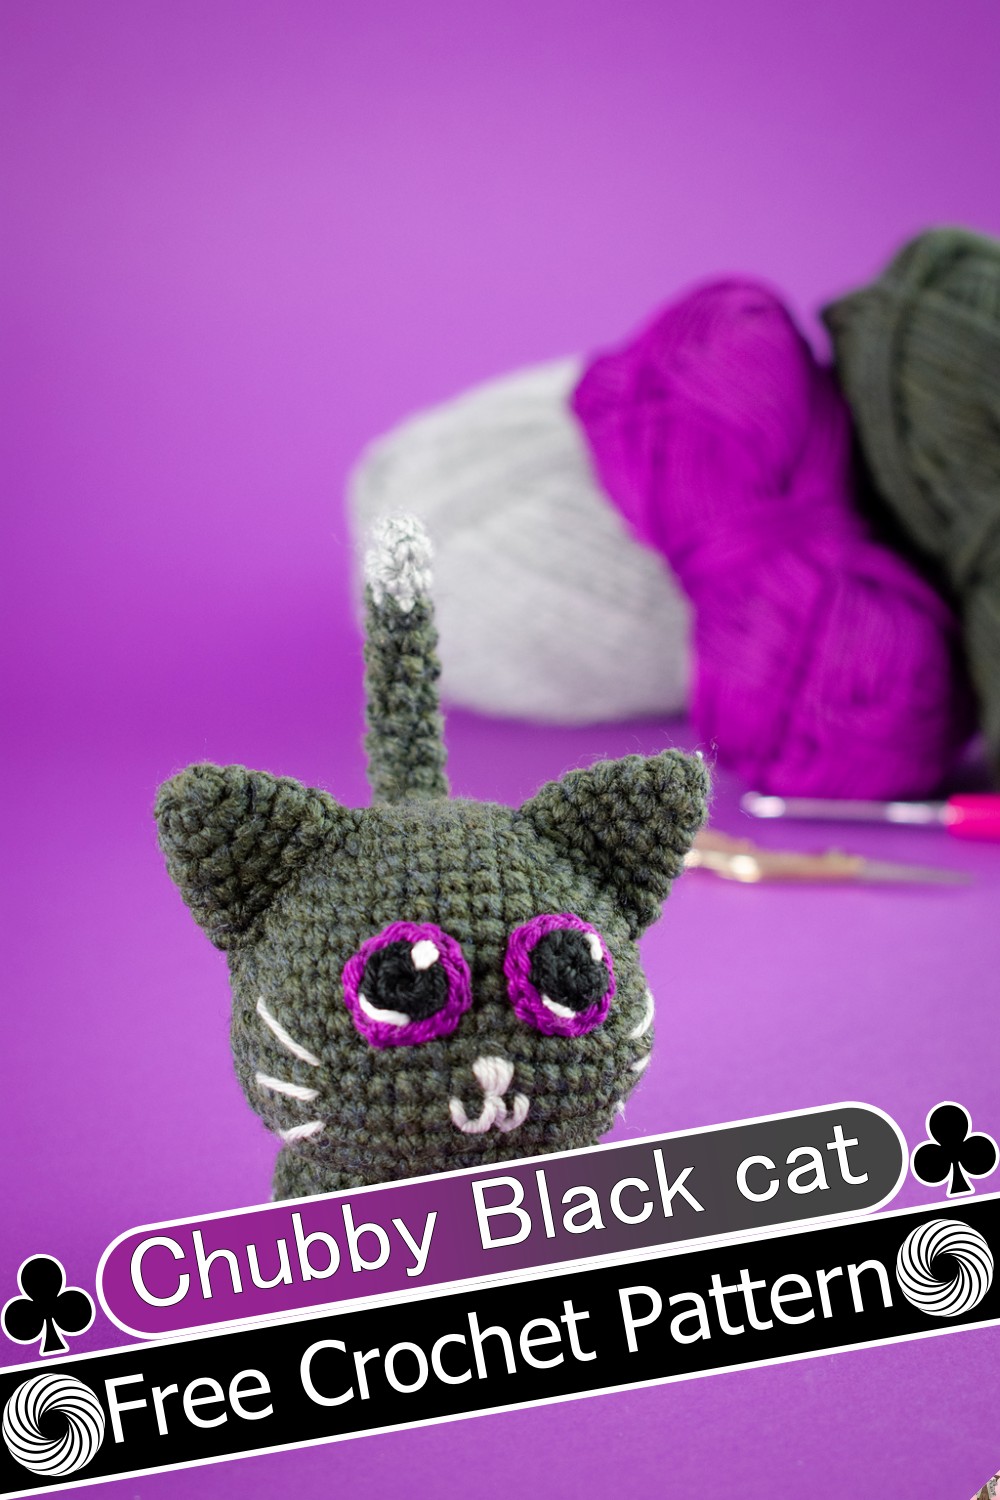 Chubby Black cat